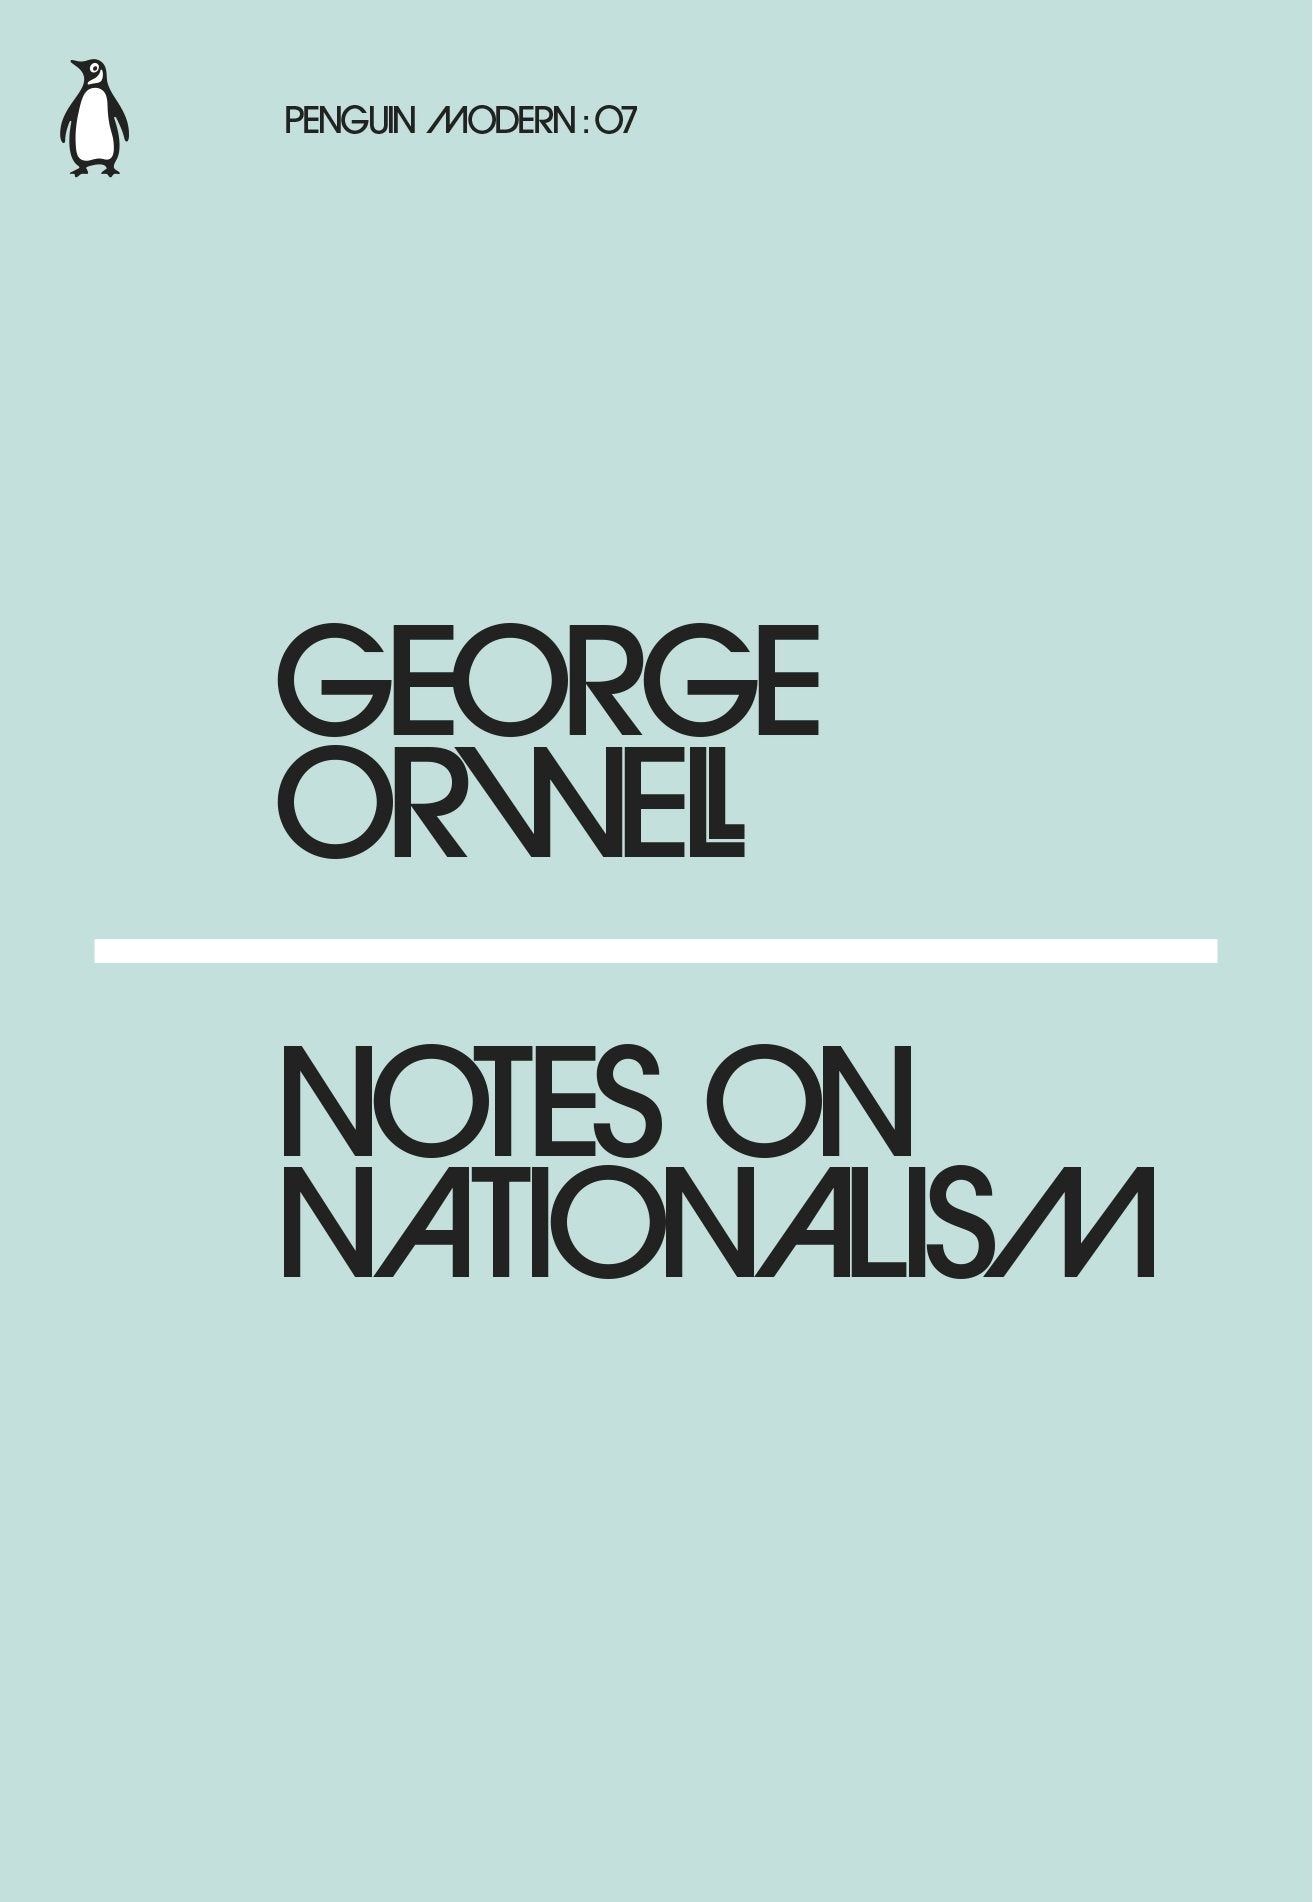 Notes on Nationalism (Penguin Modern Minis)